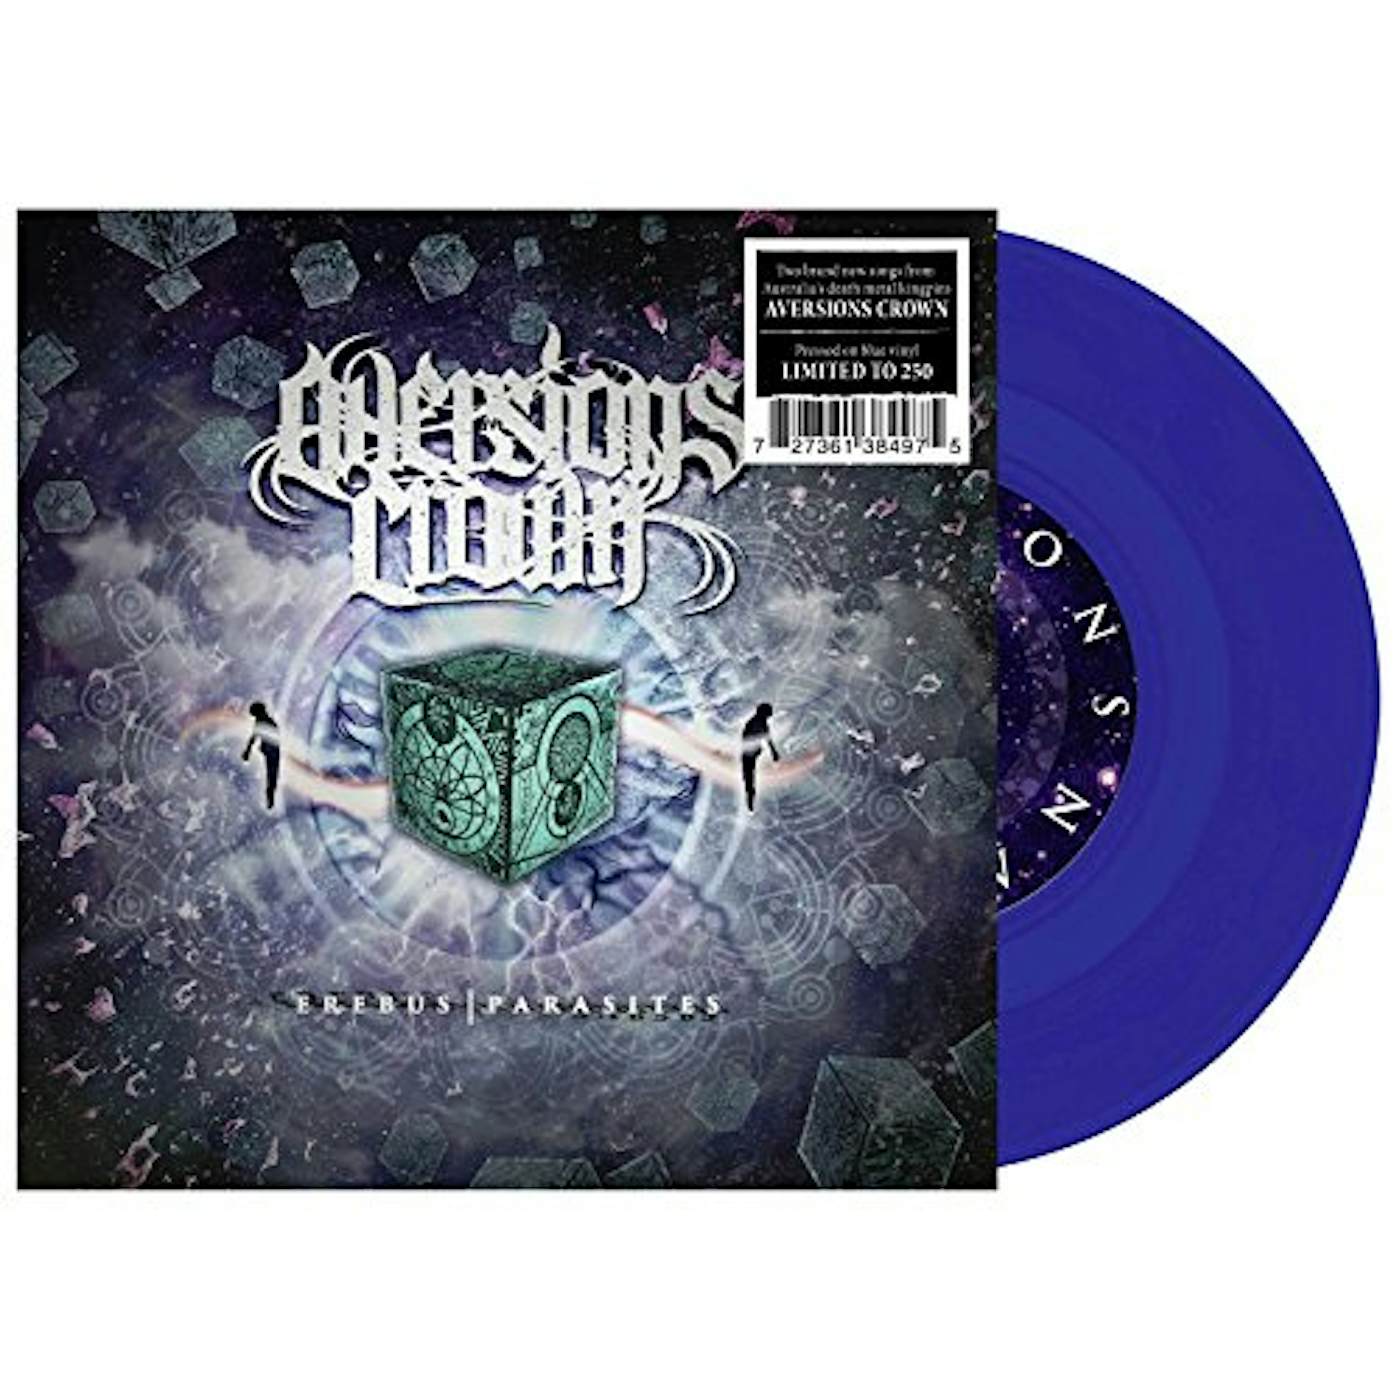 Aversions Crown EREBUS / PARASITES Vinyl Record